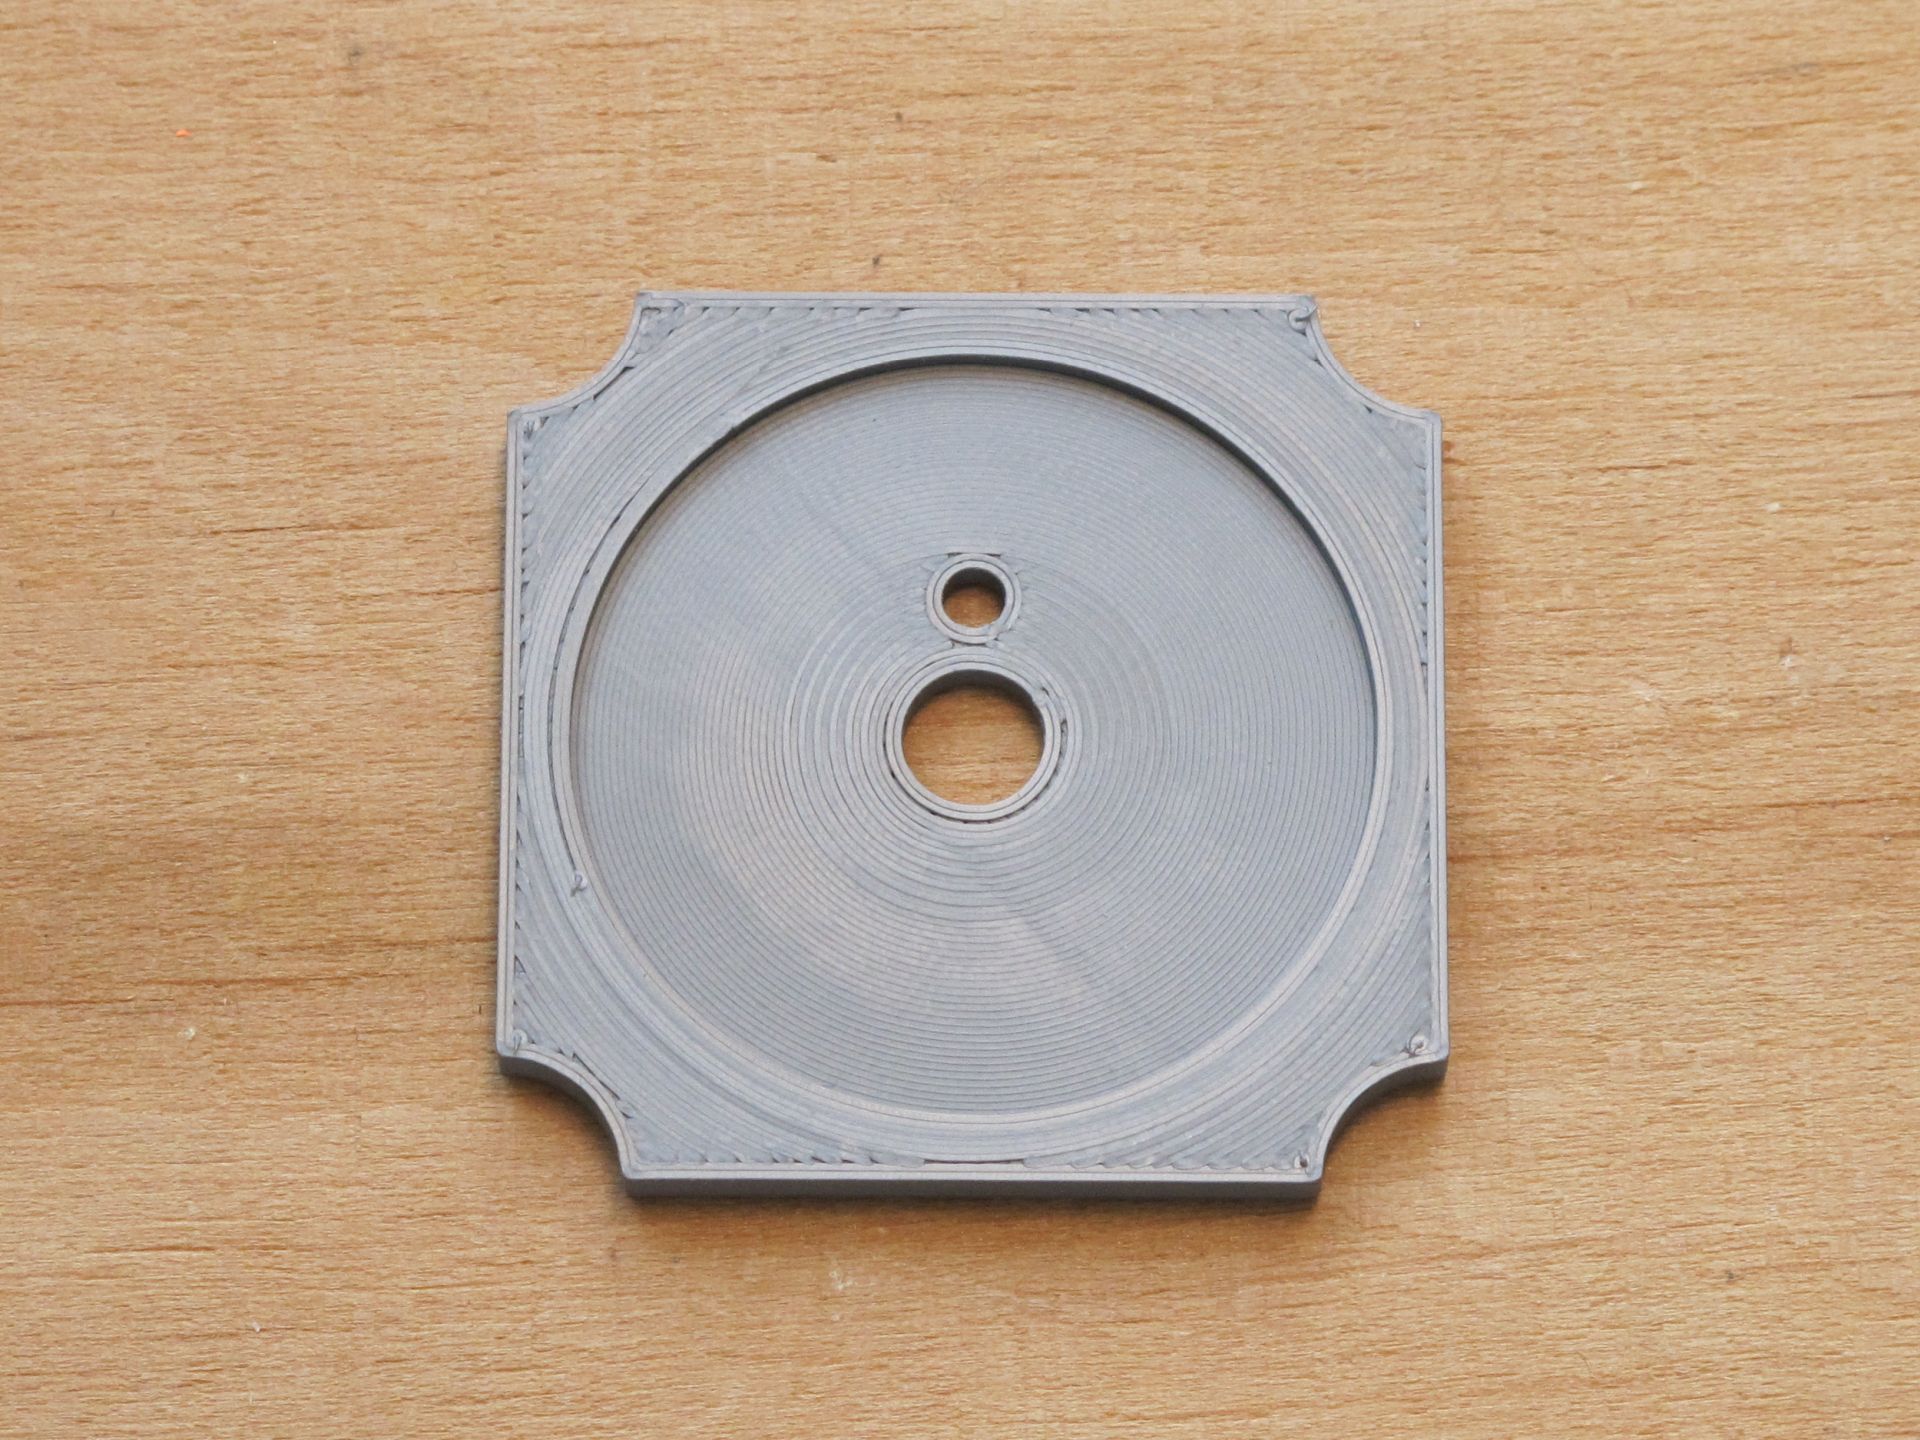 3D printed potentiometer holder